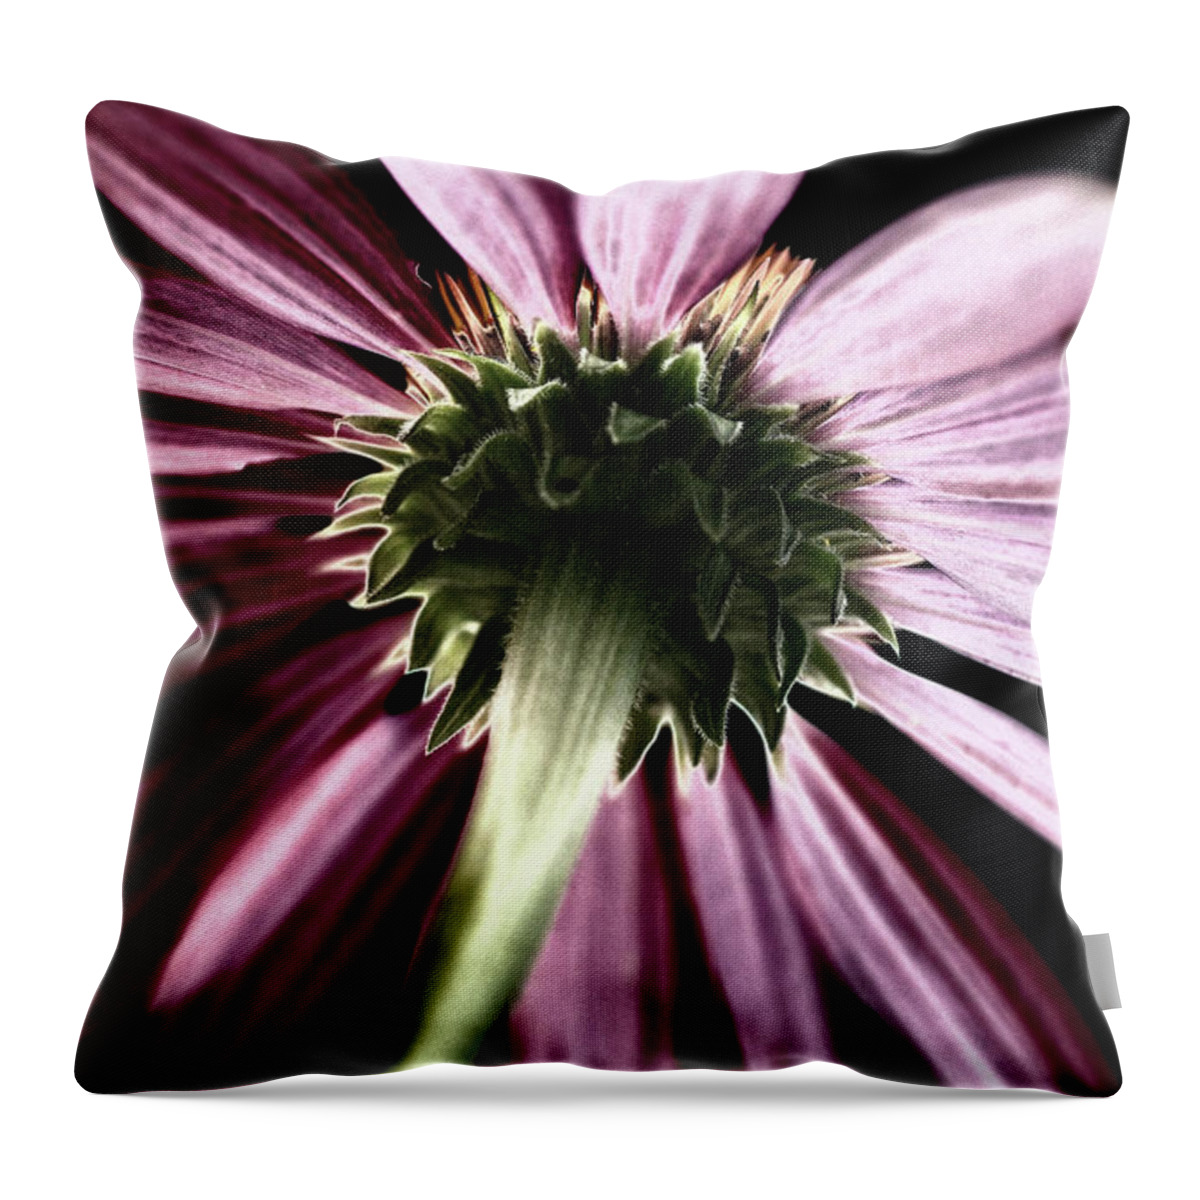 Flower Throw Pillow featuring the photograph Midnight Brilliance by Andrea Platt